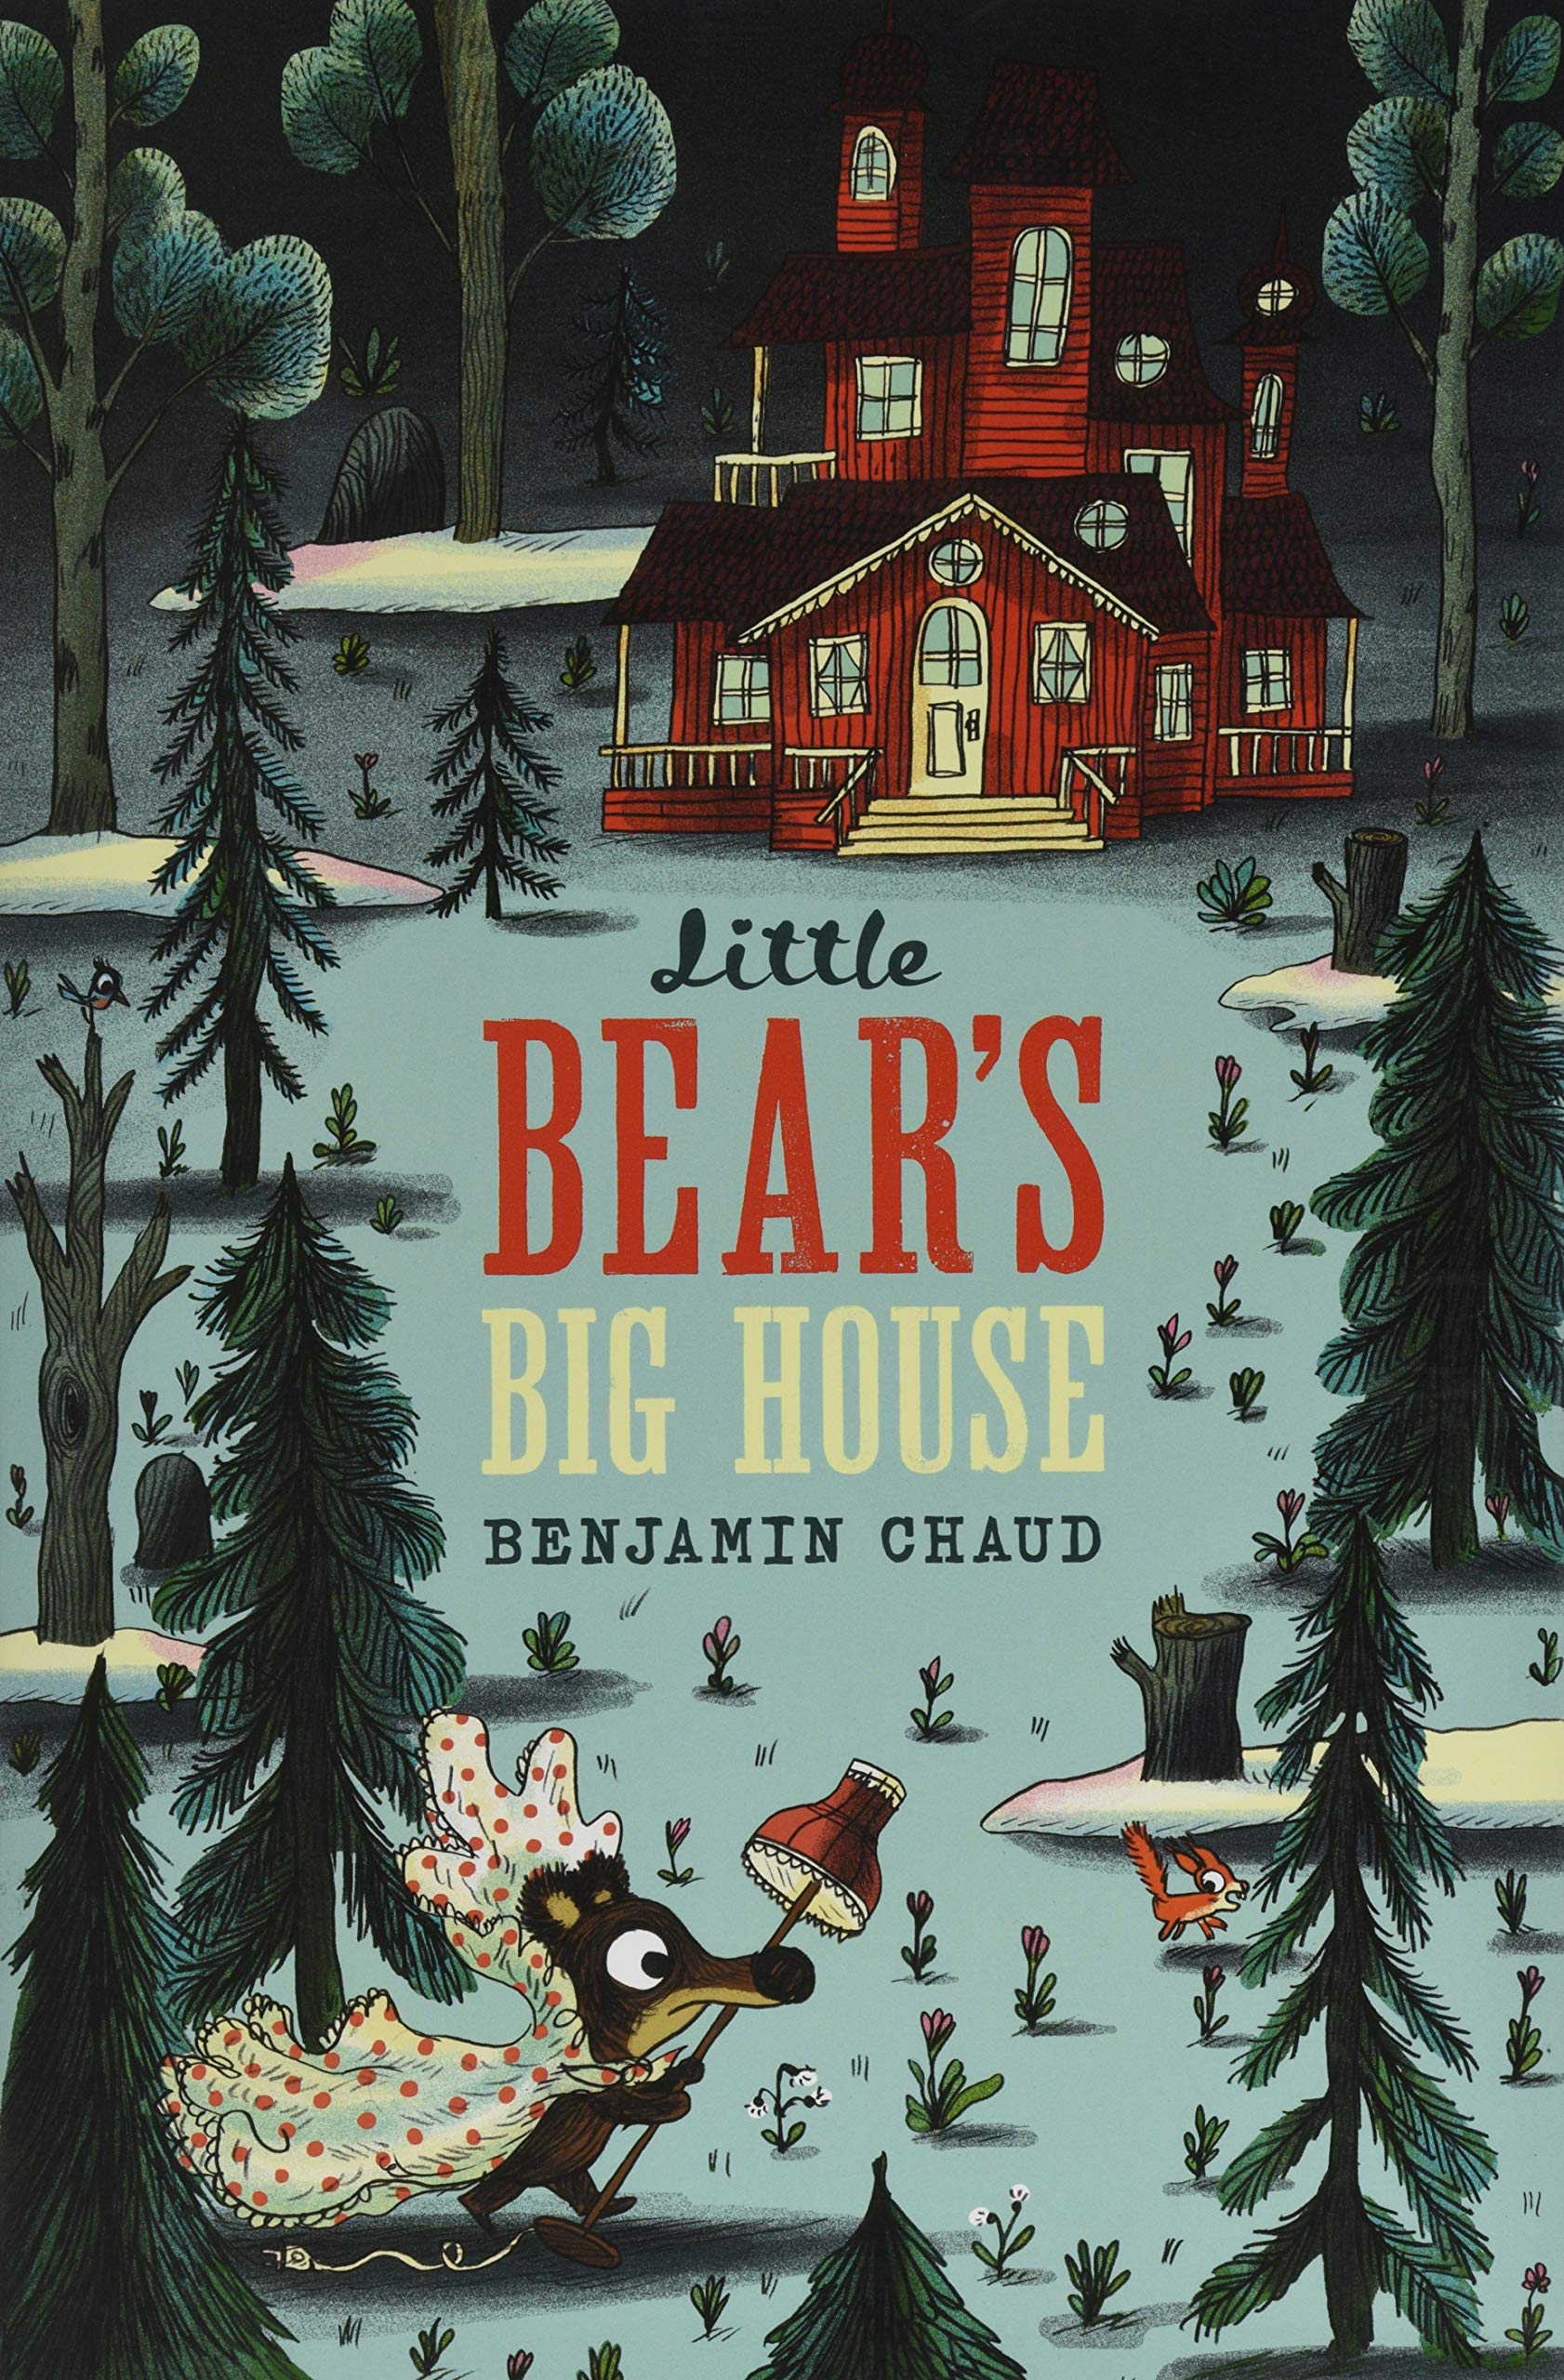 Little Bear's Big House: